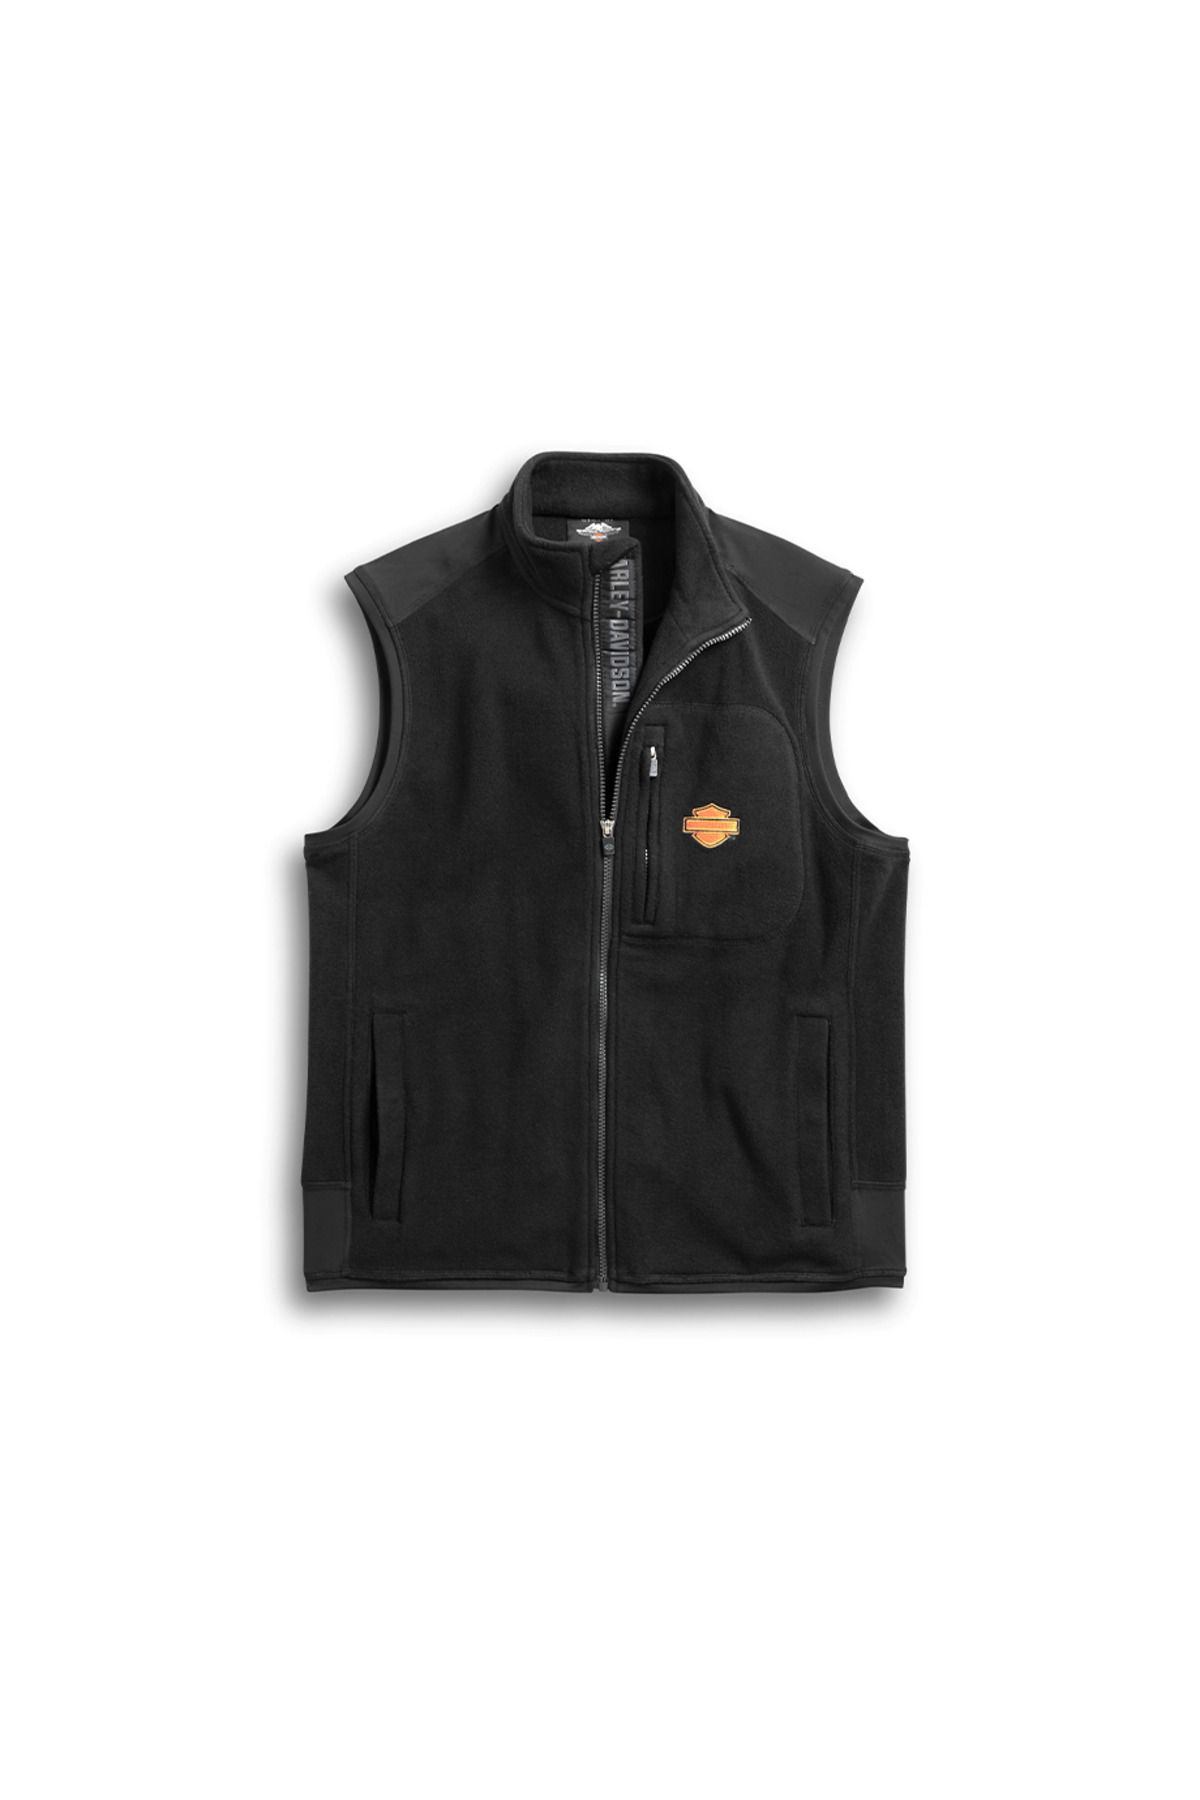 Harley Davidson Harley-davidson Men's Fleece Vest